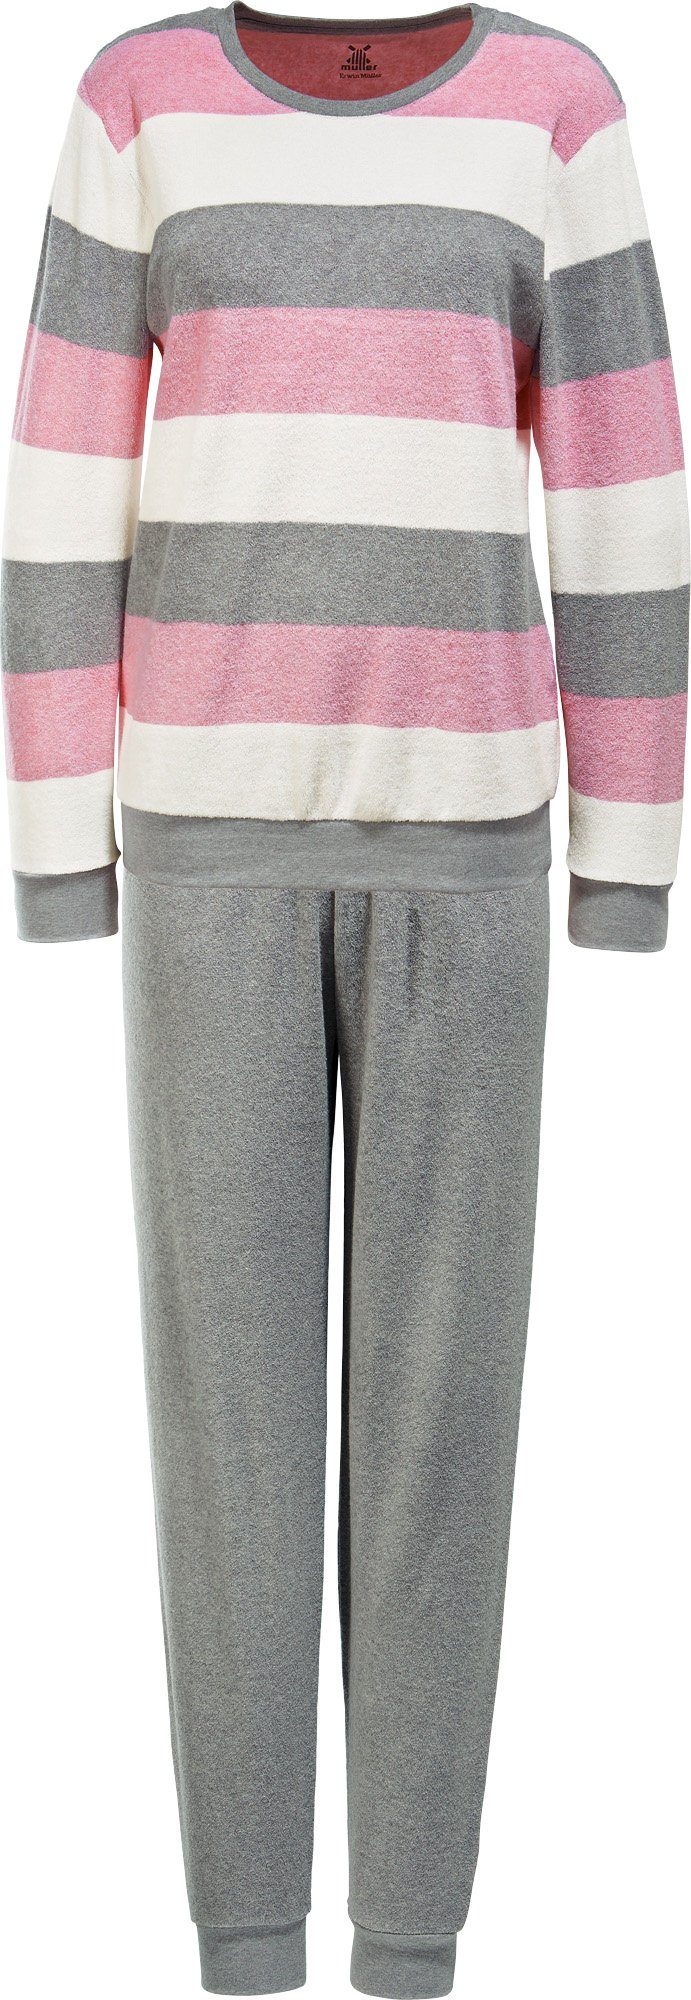 Erwin Müller Pyjama Damen-Schlafanzug Frottee Streifen rosé